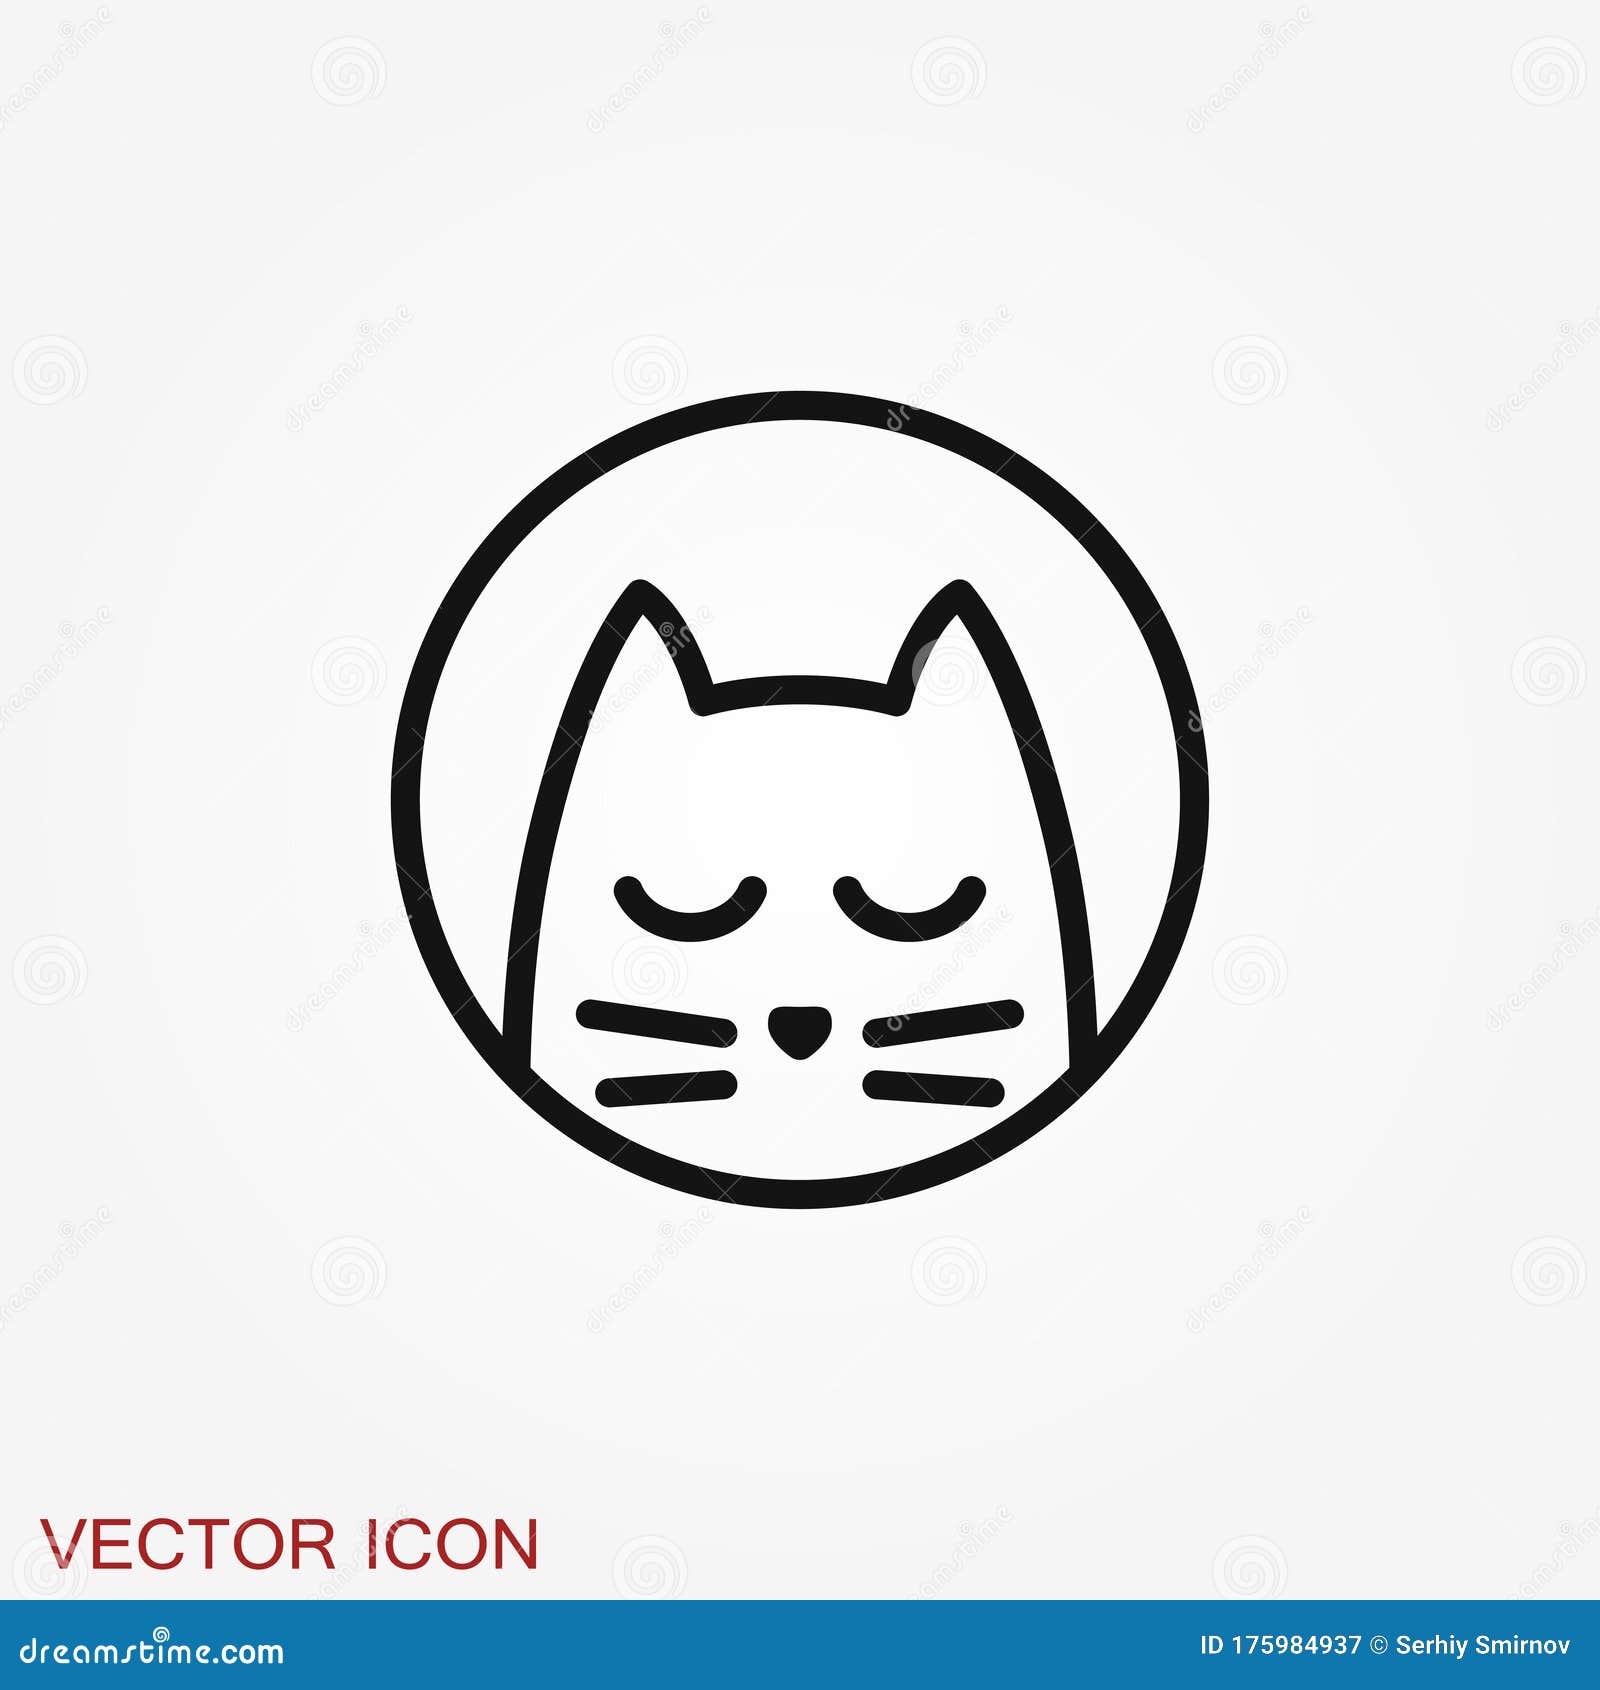 Cute cat symbol icon Royalty Free Vector Image